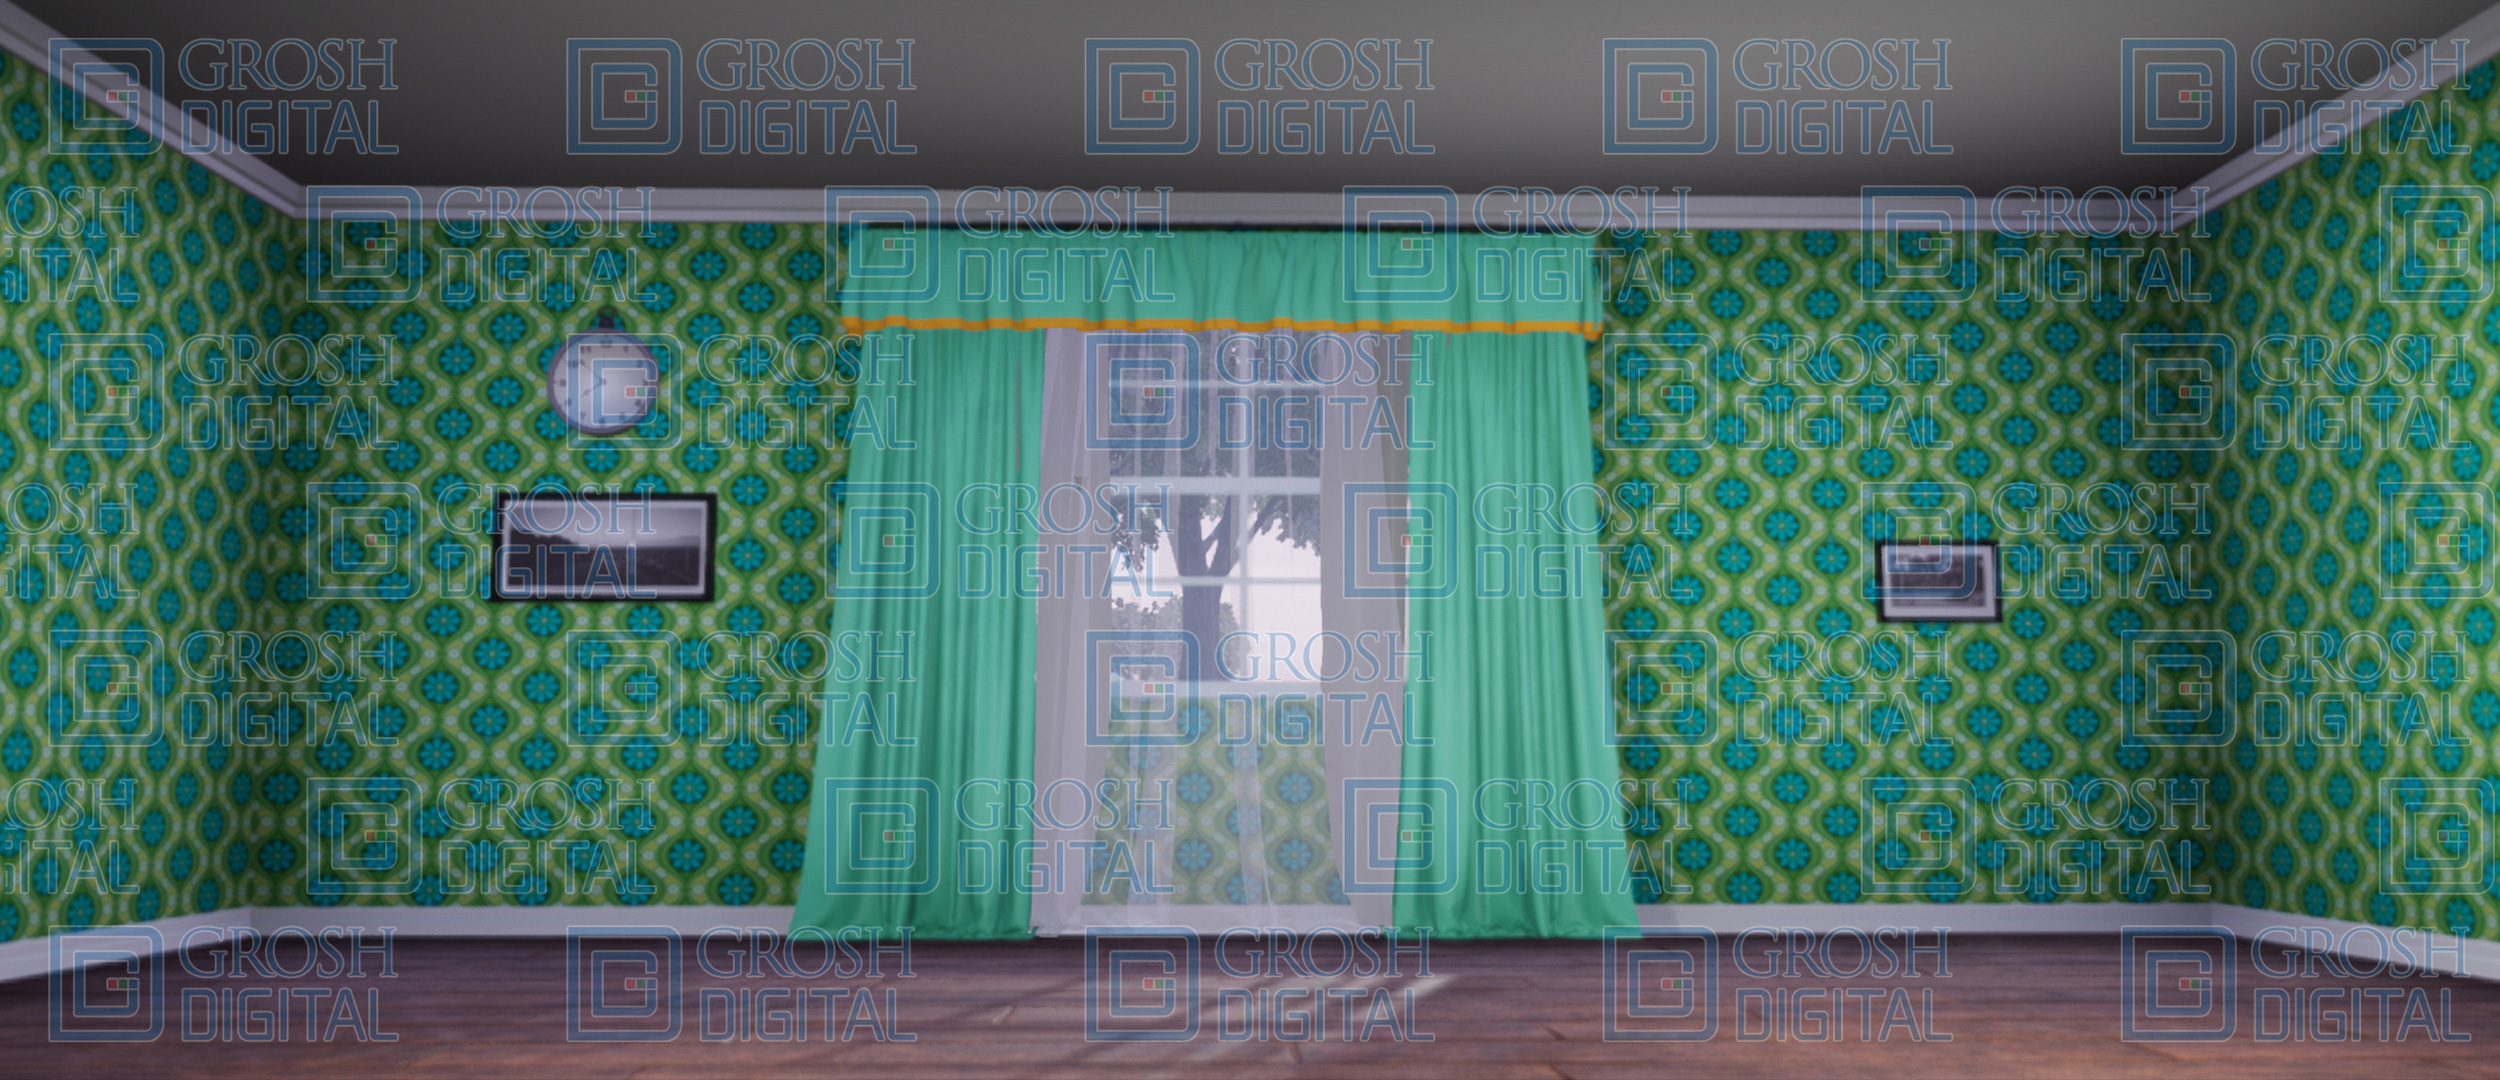 Living Room Projected Backdrops Grosh Digital